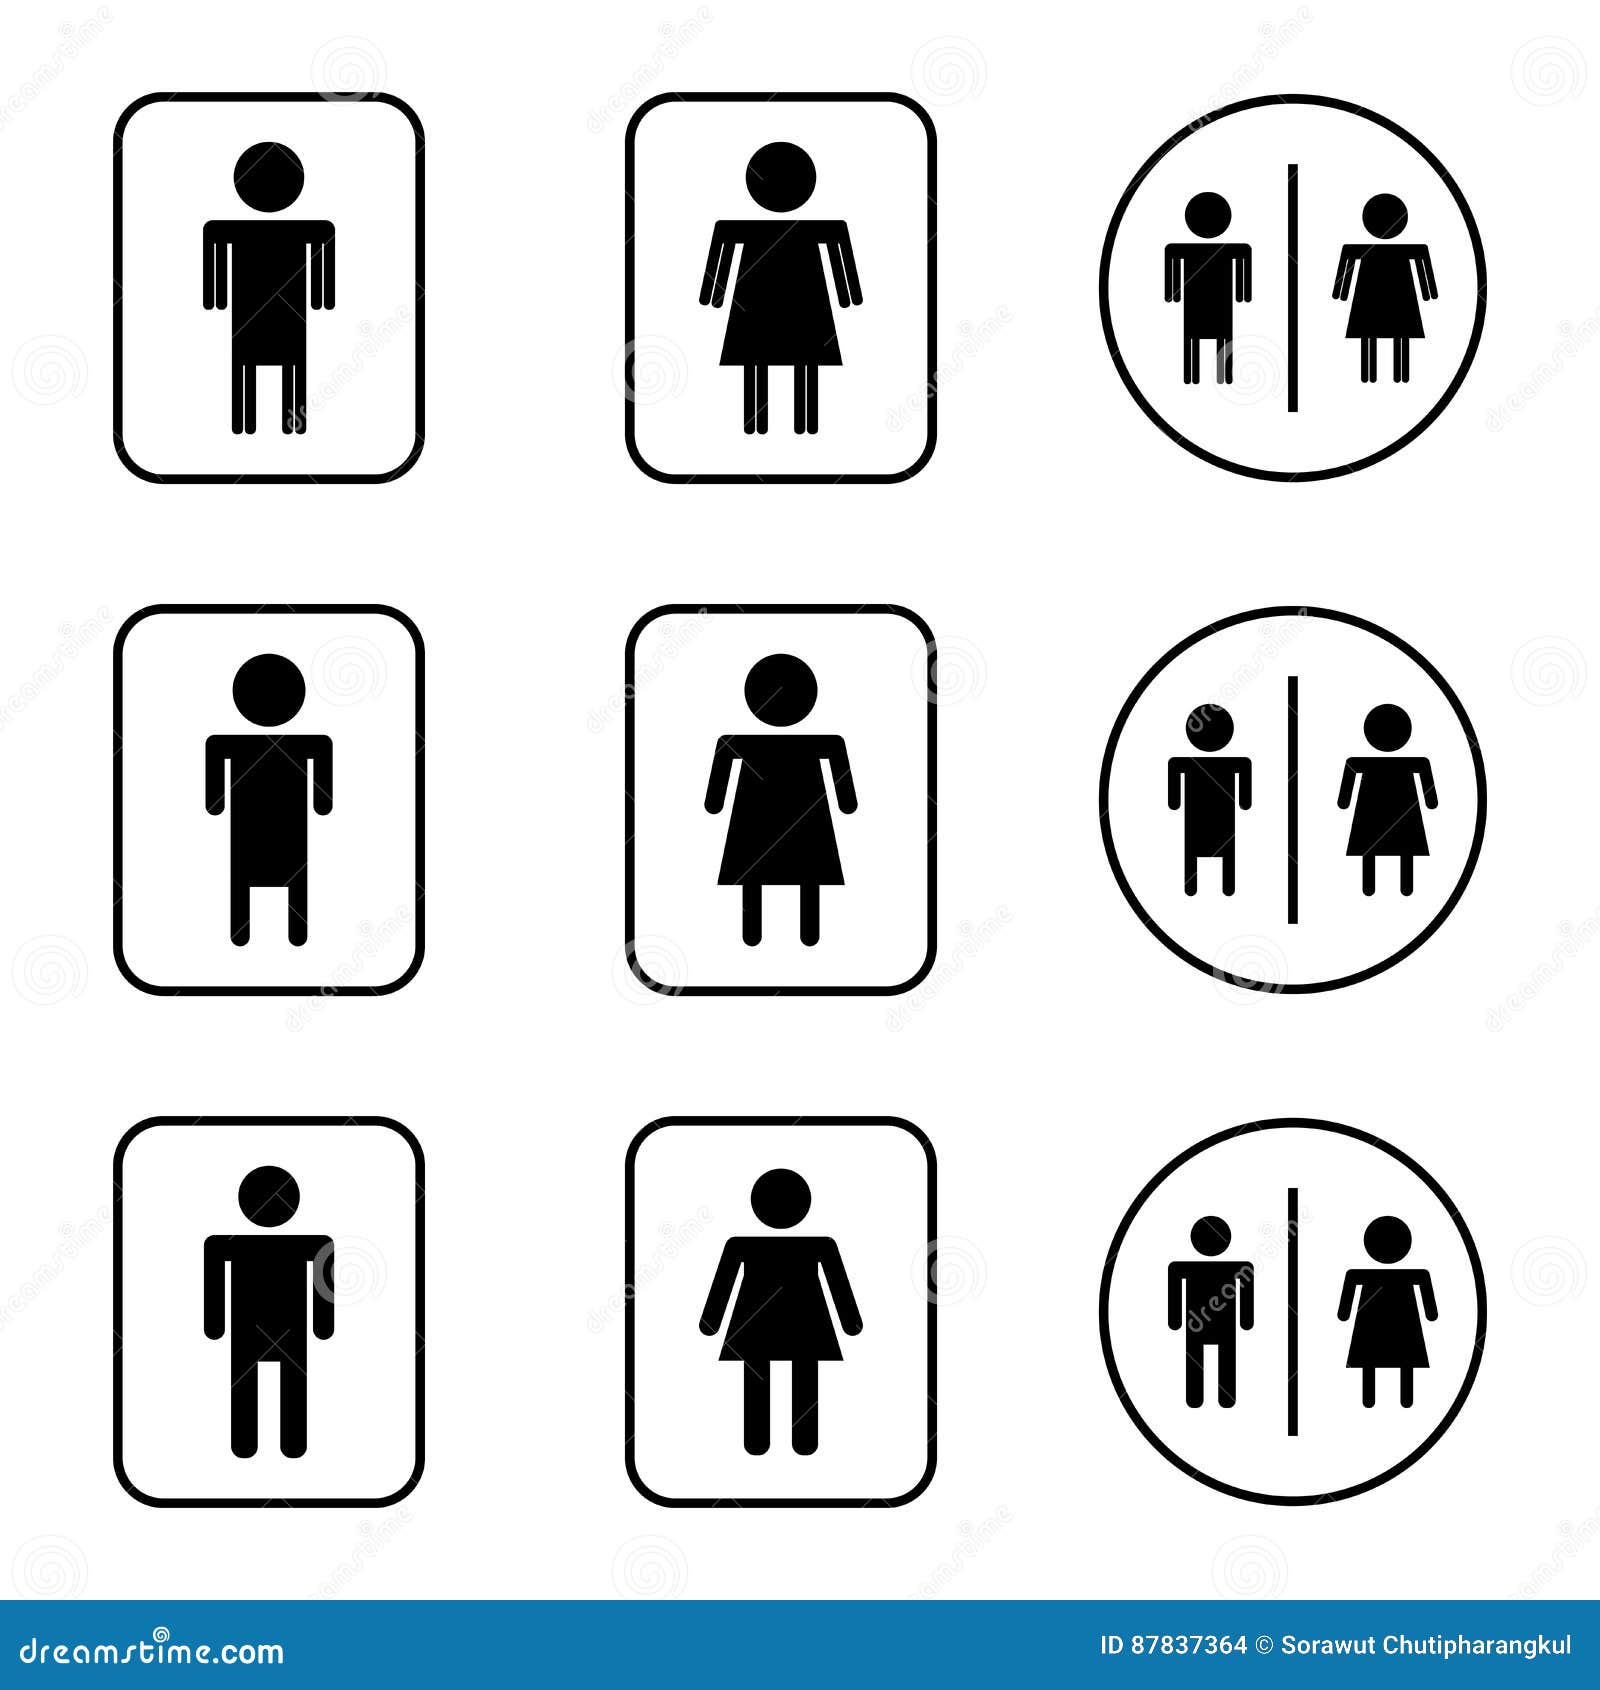 Toilet Sign Design Icons Set Stock Vector - Illustration of gentlemen ...